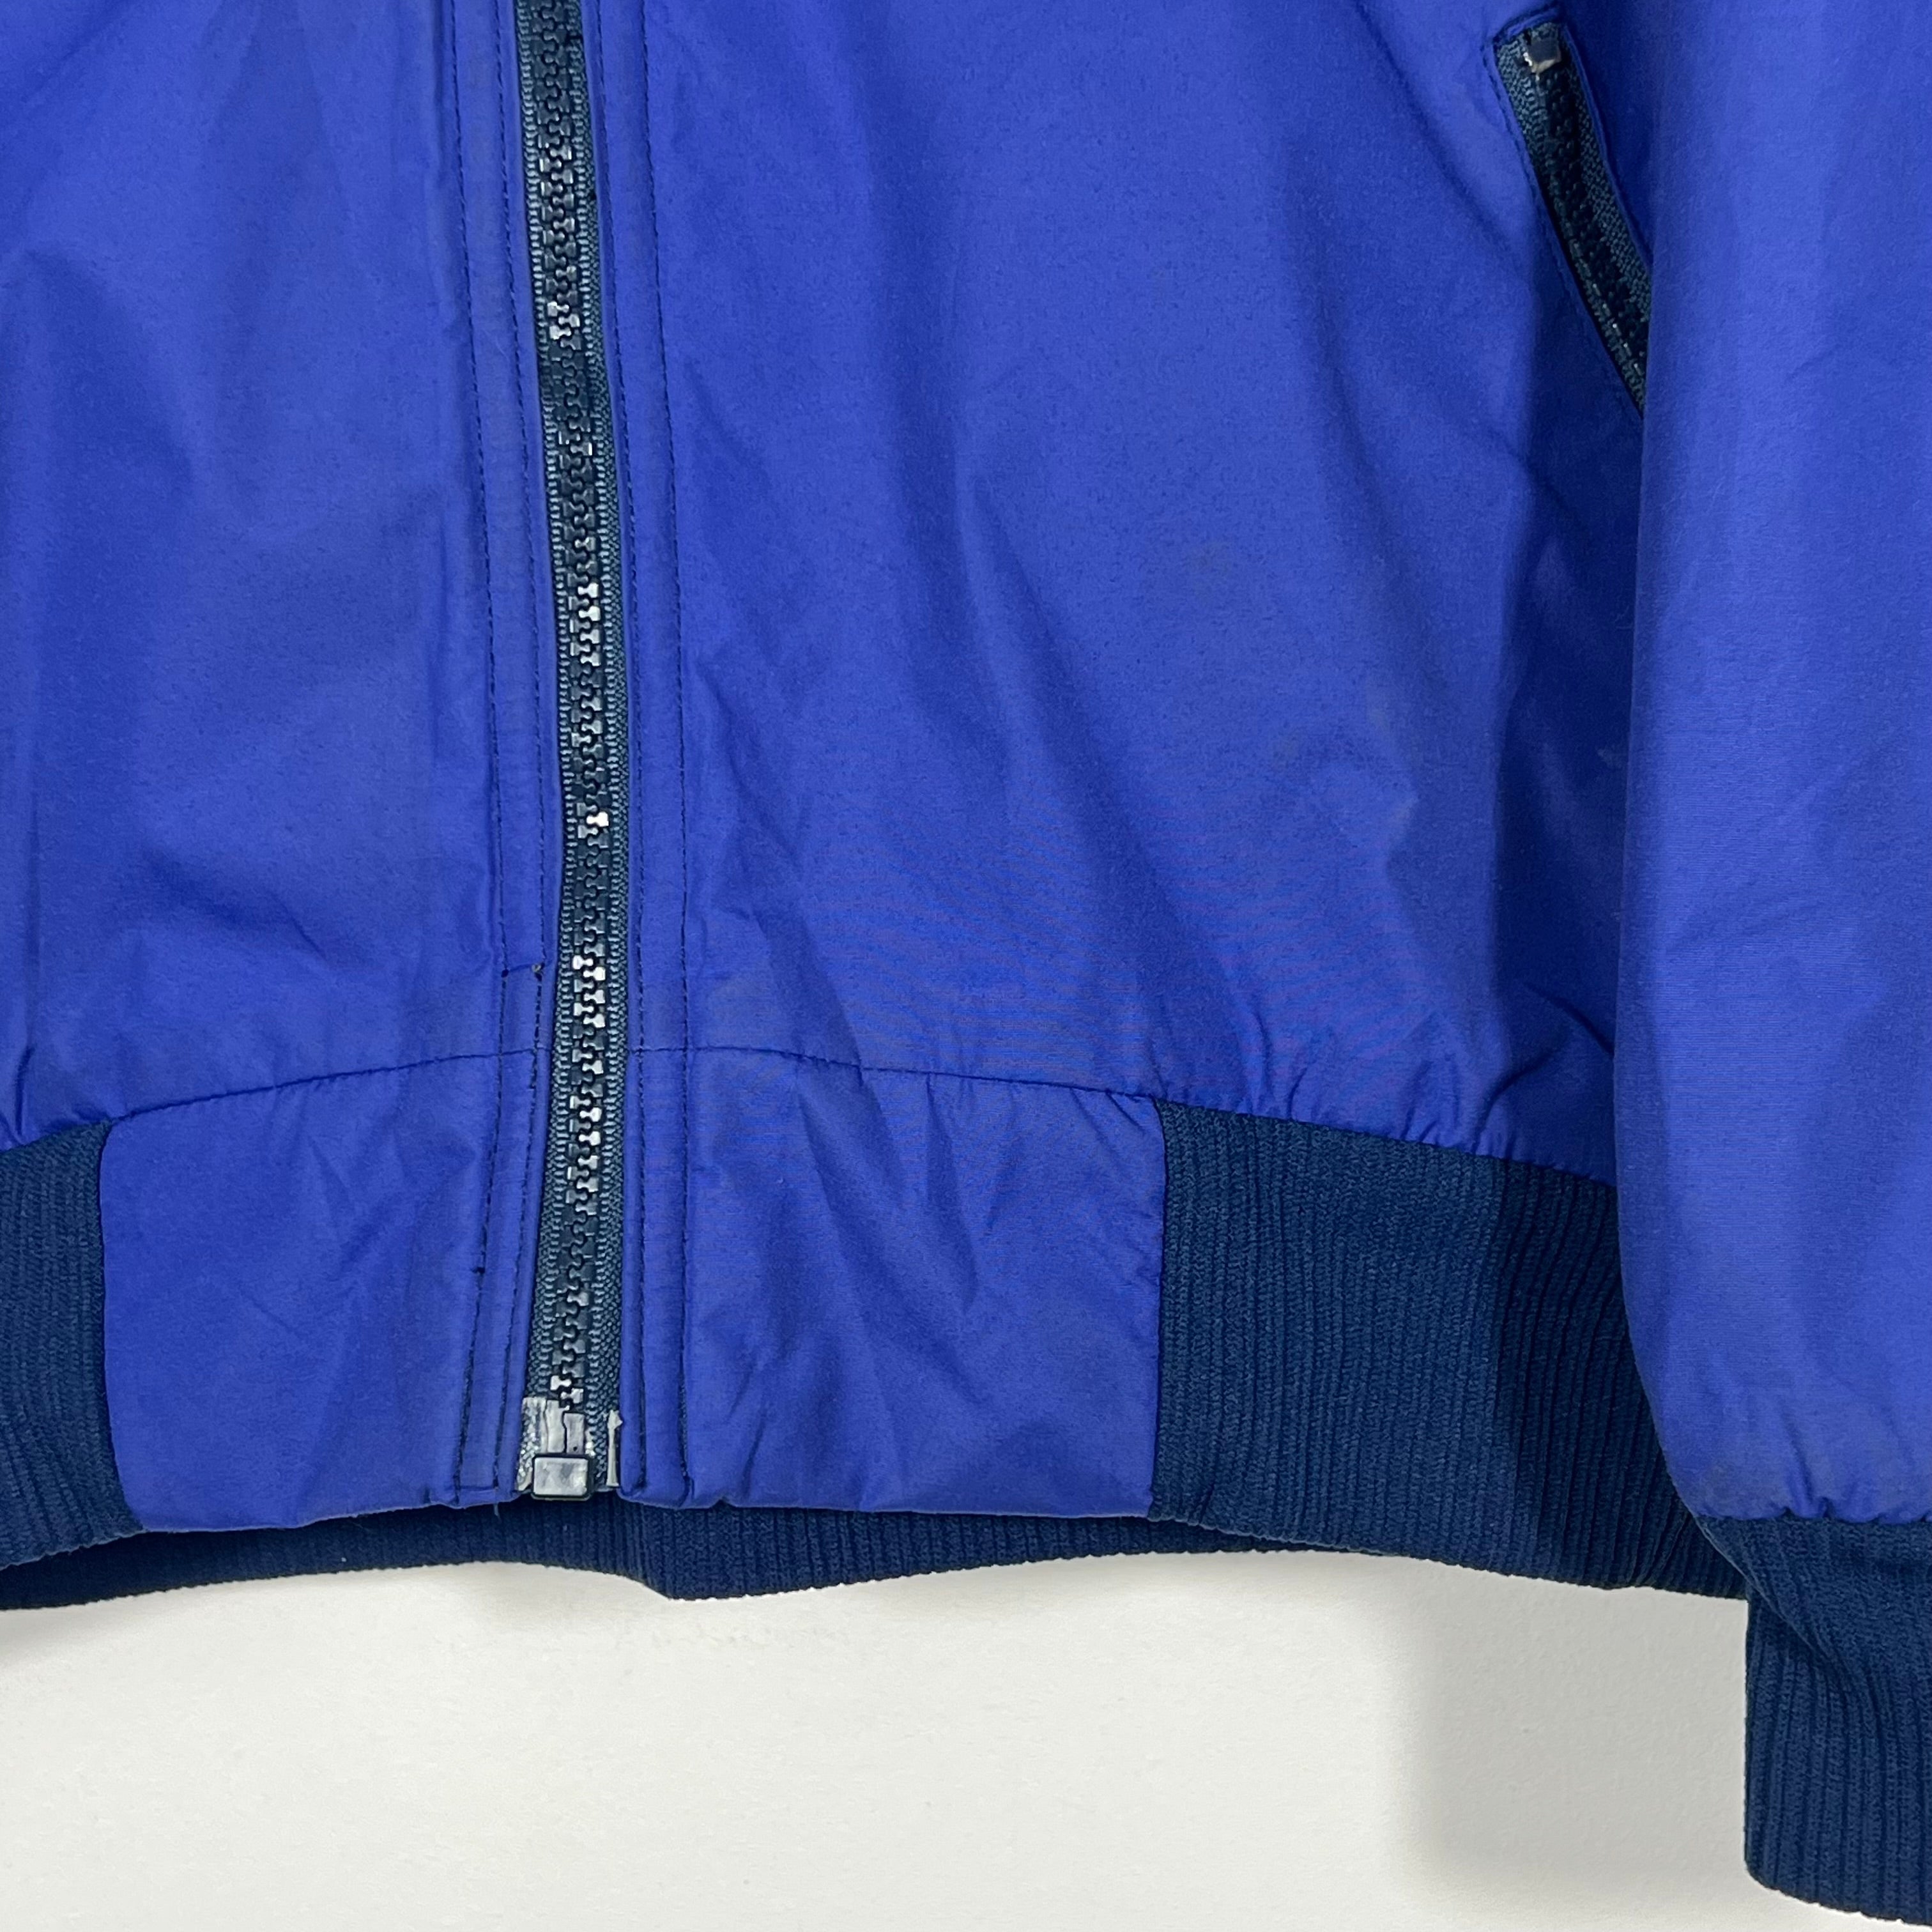 Vintage Patagonia Fleece Lined Lightweight Jacket - Women's Medium